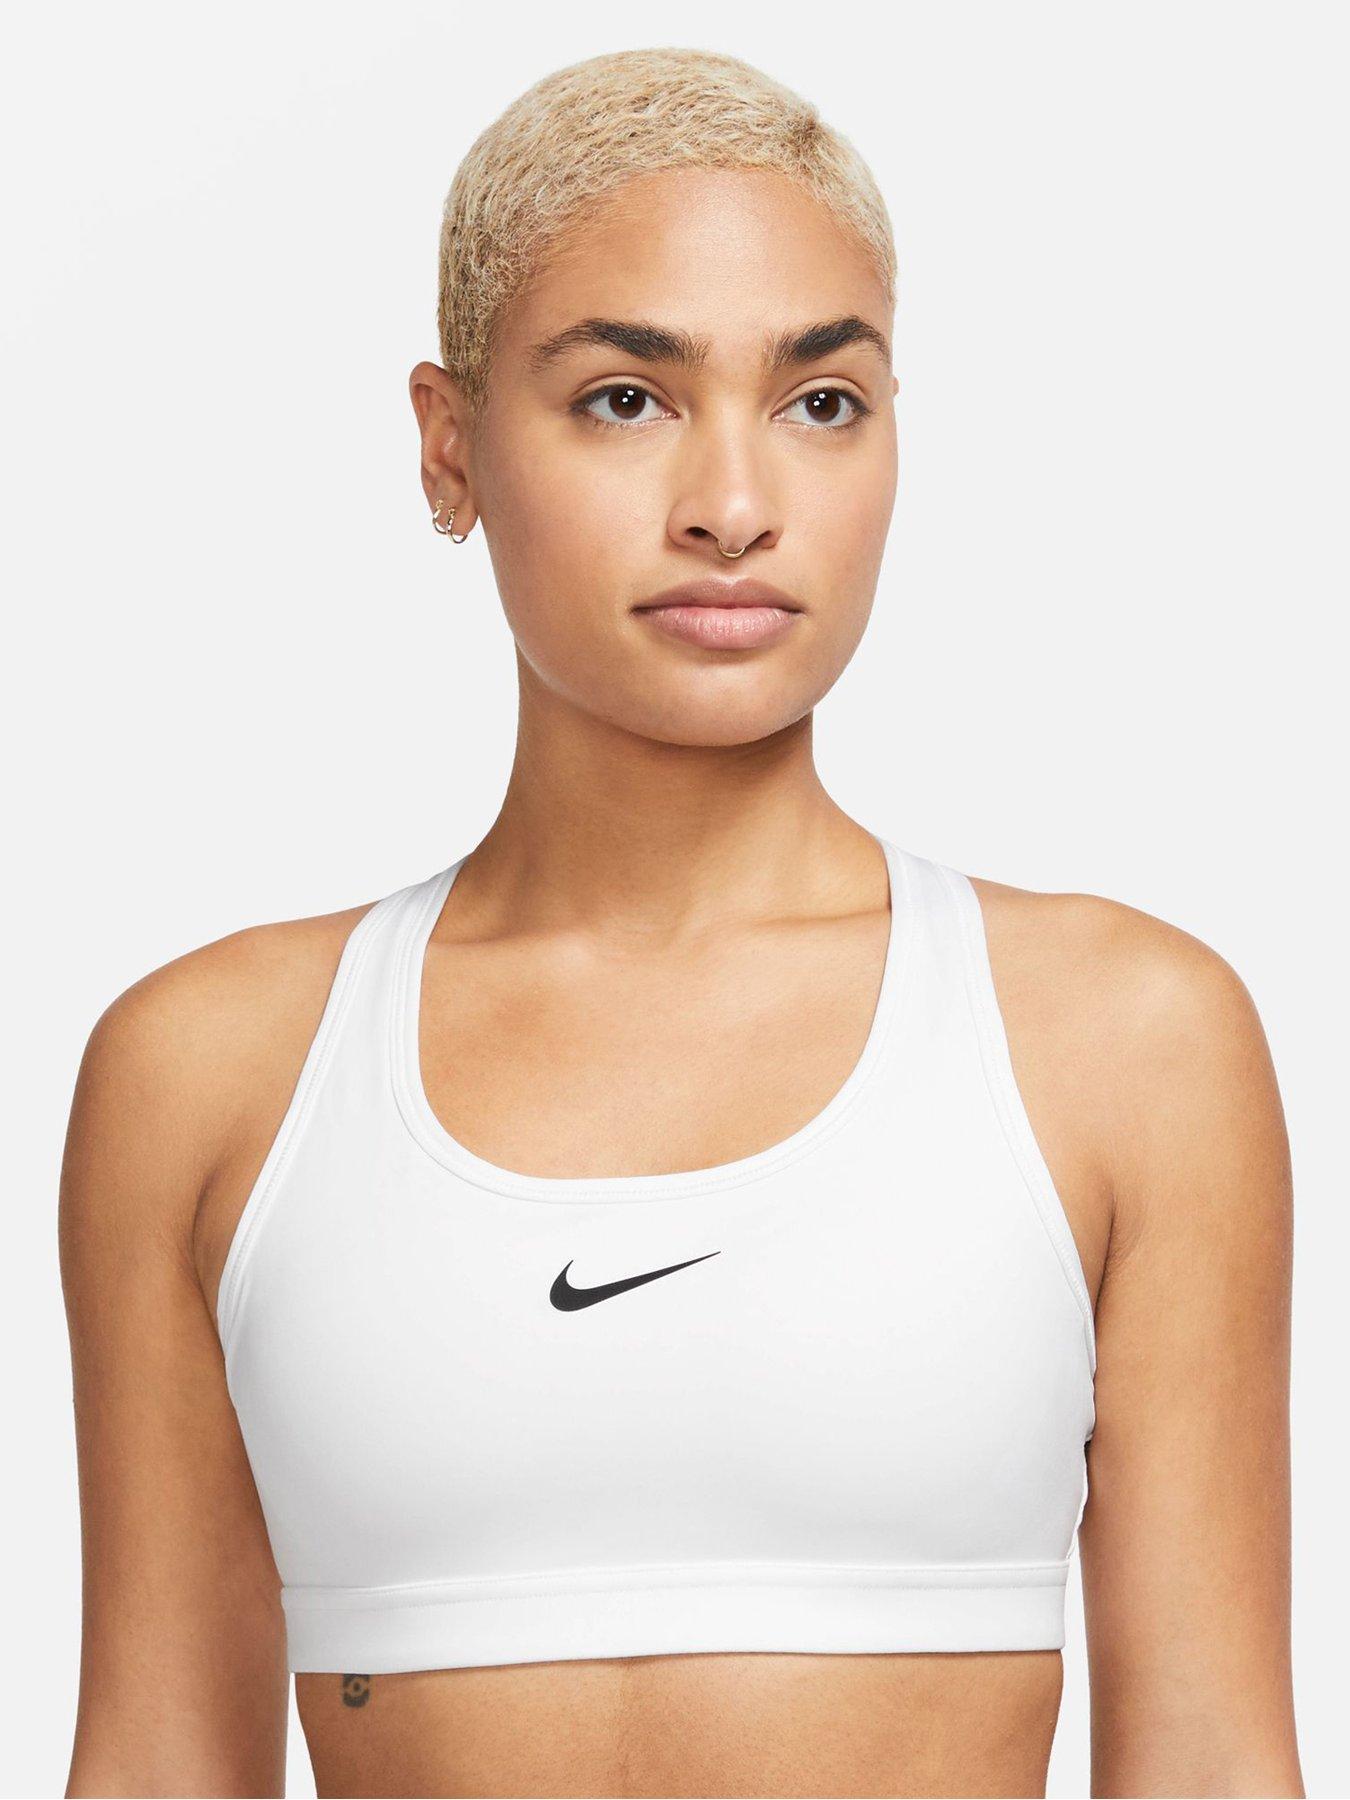 Nike Swoosh Medium Support Bra - Pink/White